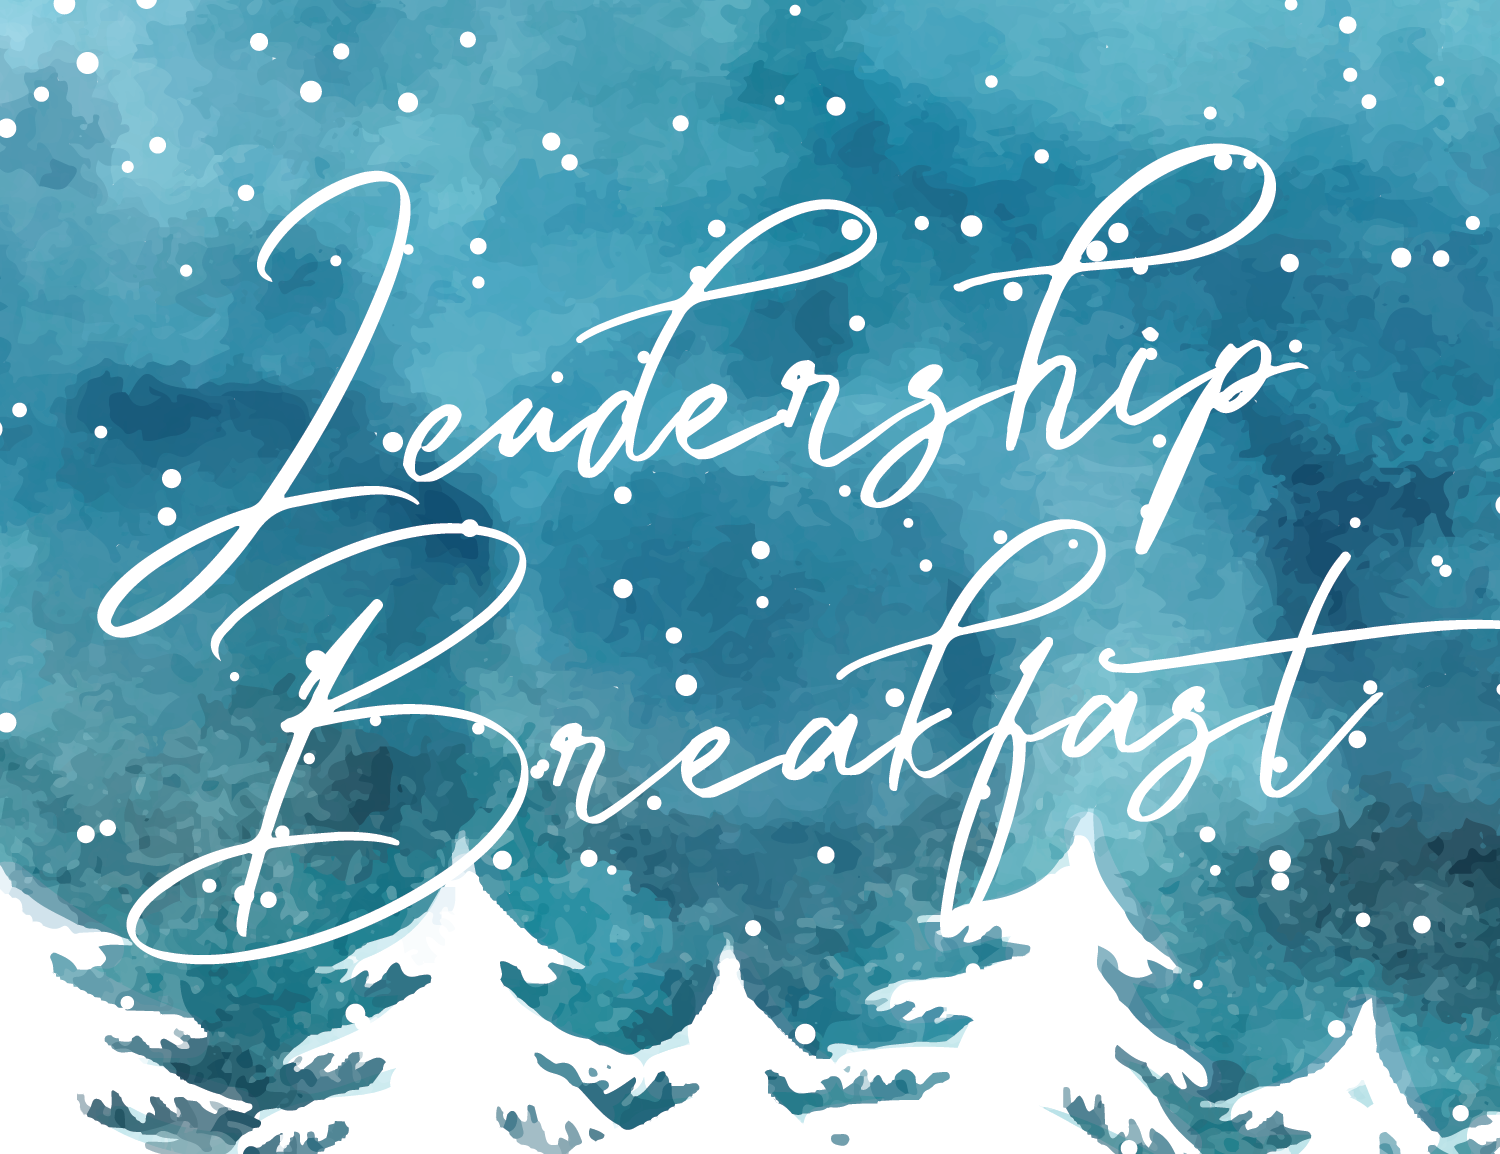 Leadership Breakfast